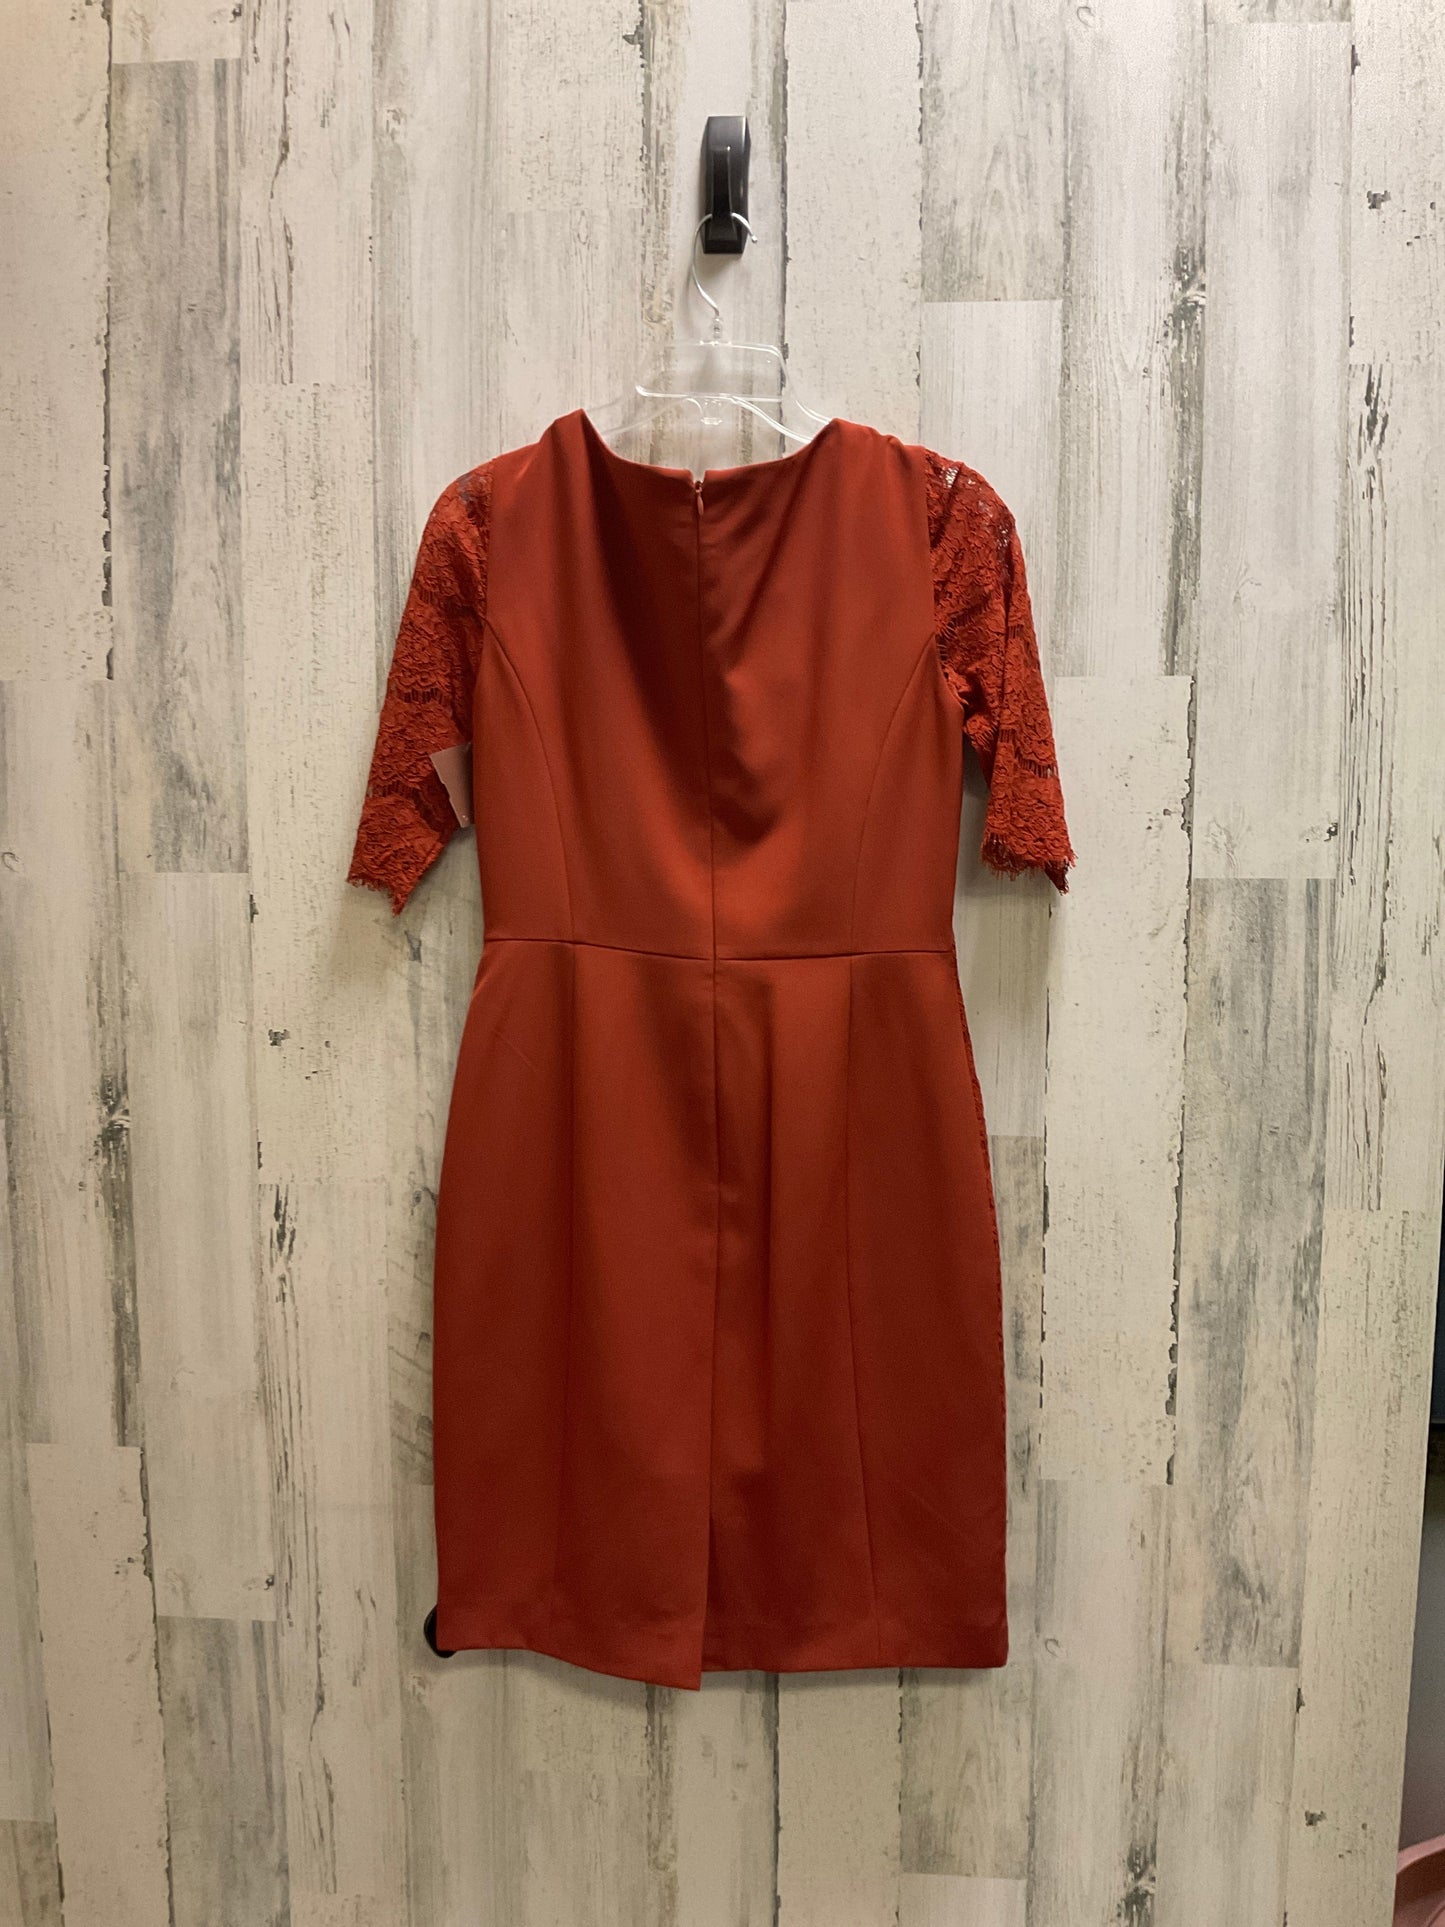 Dress Casual Short By Antonio Melani  Size: S